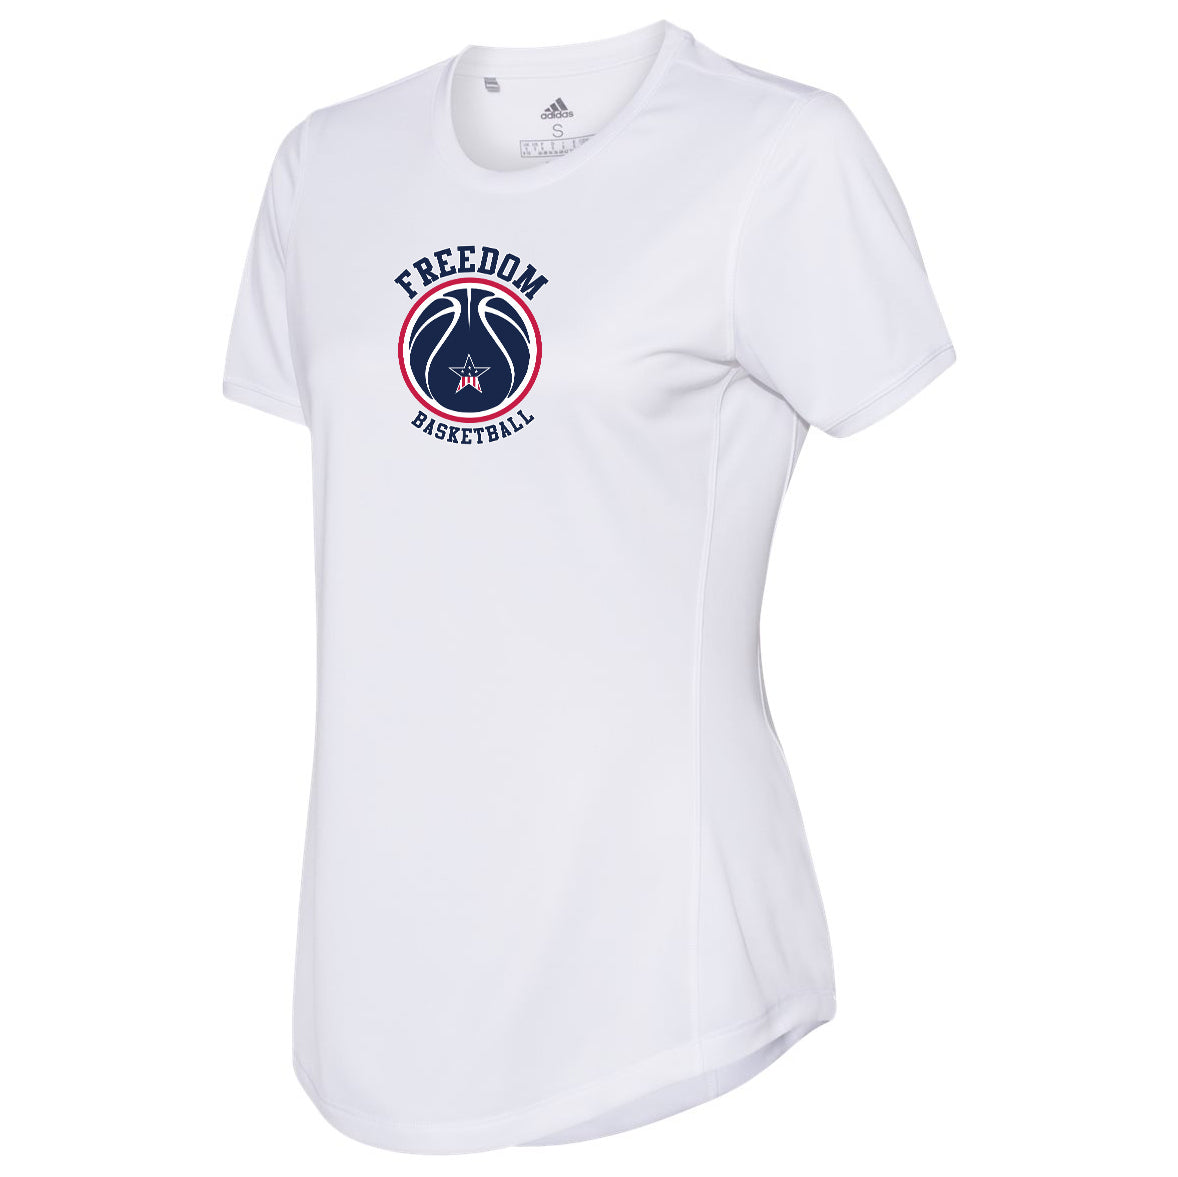 Freedom Basketball Women's Adidas Sport T-Shirt